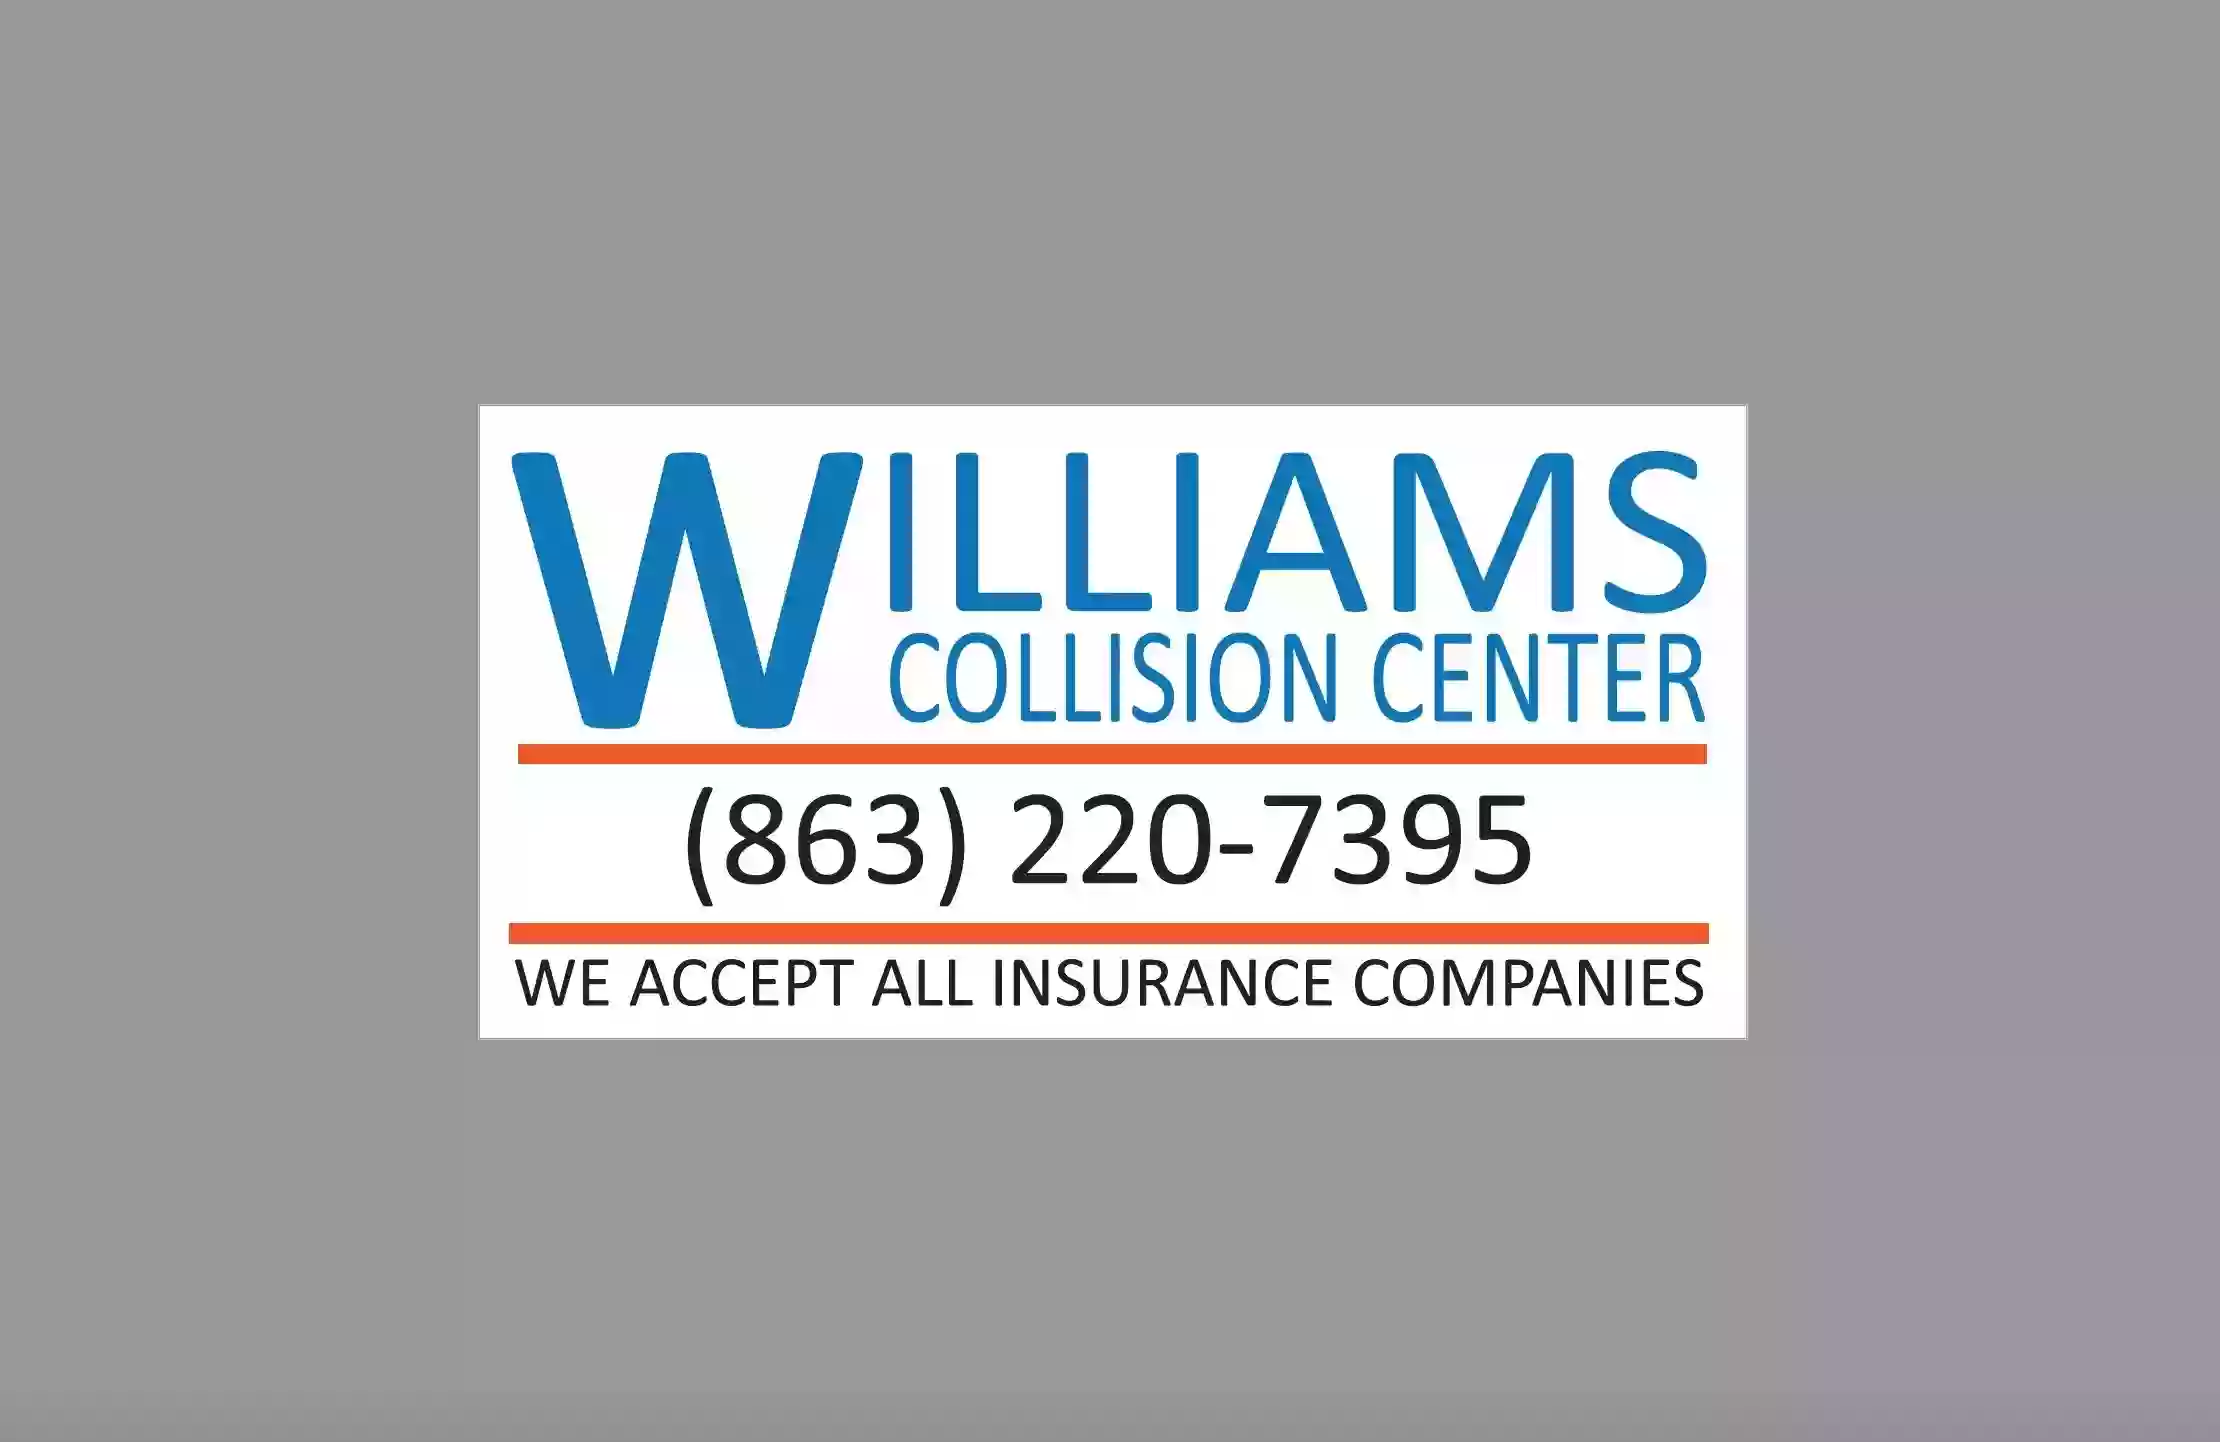 WILLIAMS COLLISION CENTER